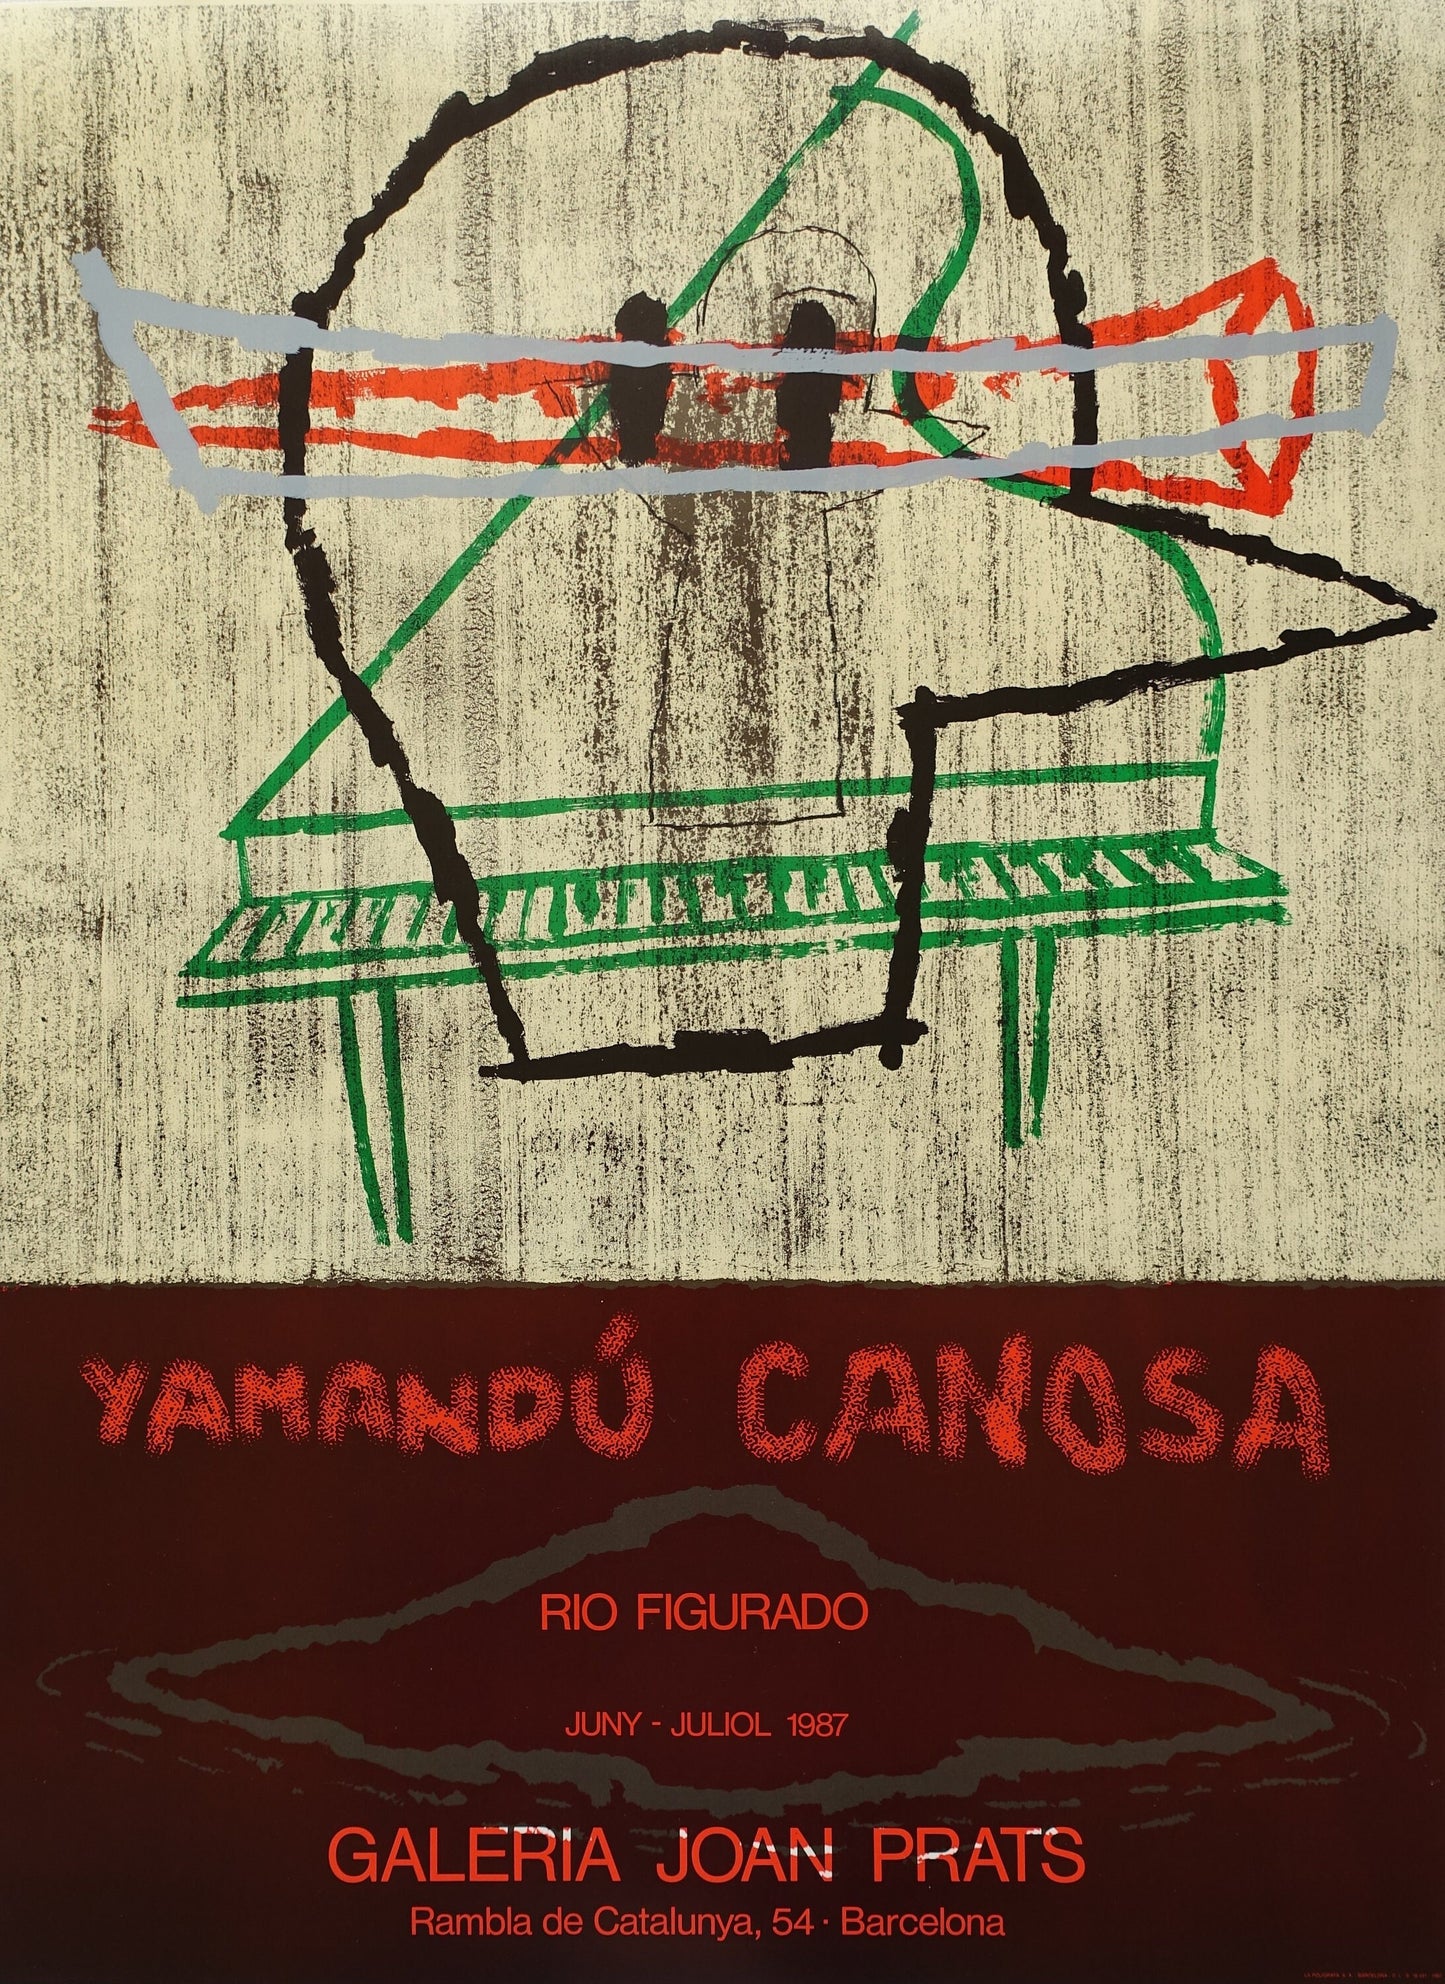 1987 Yamandú Canosa Spanish Exhibition Poster - Original Vintage Poster